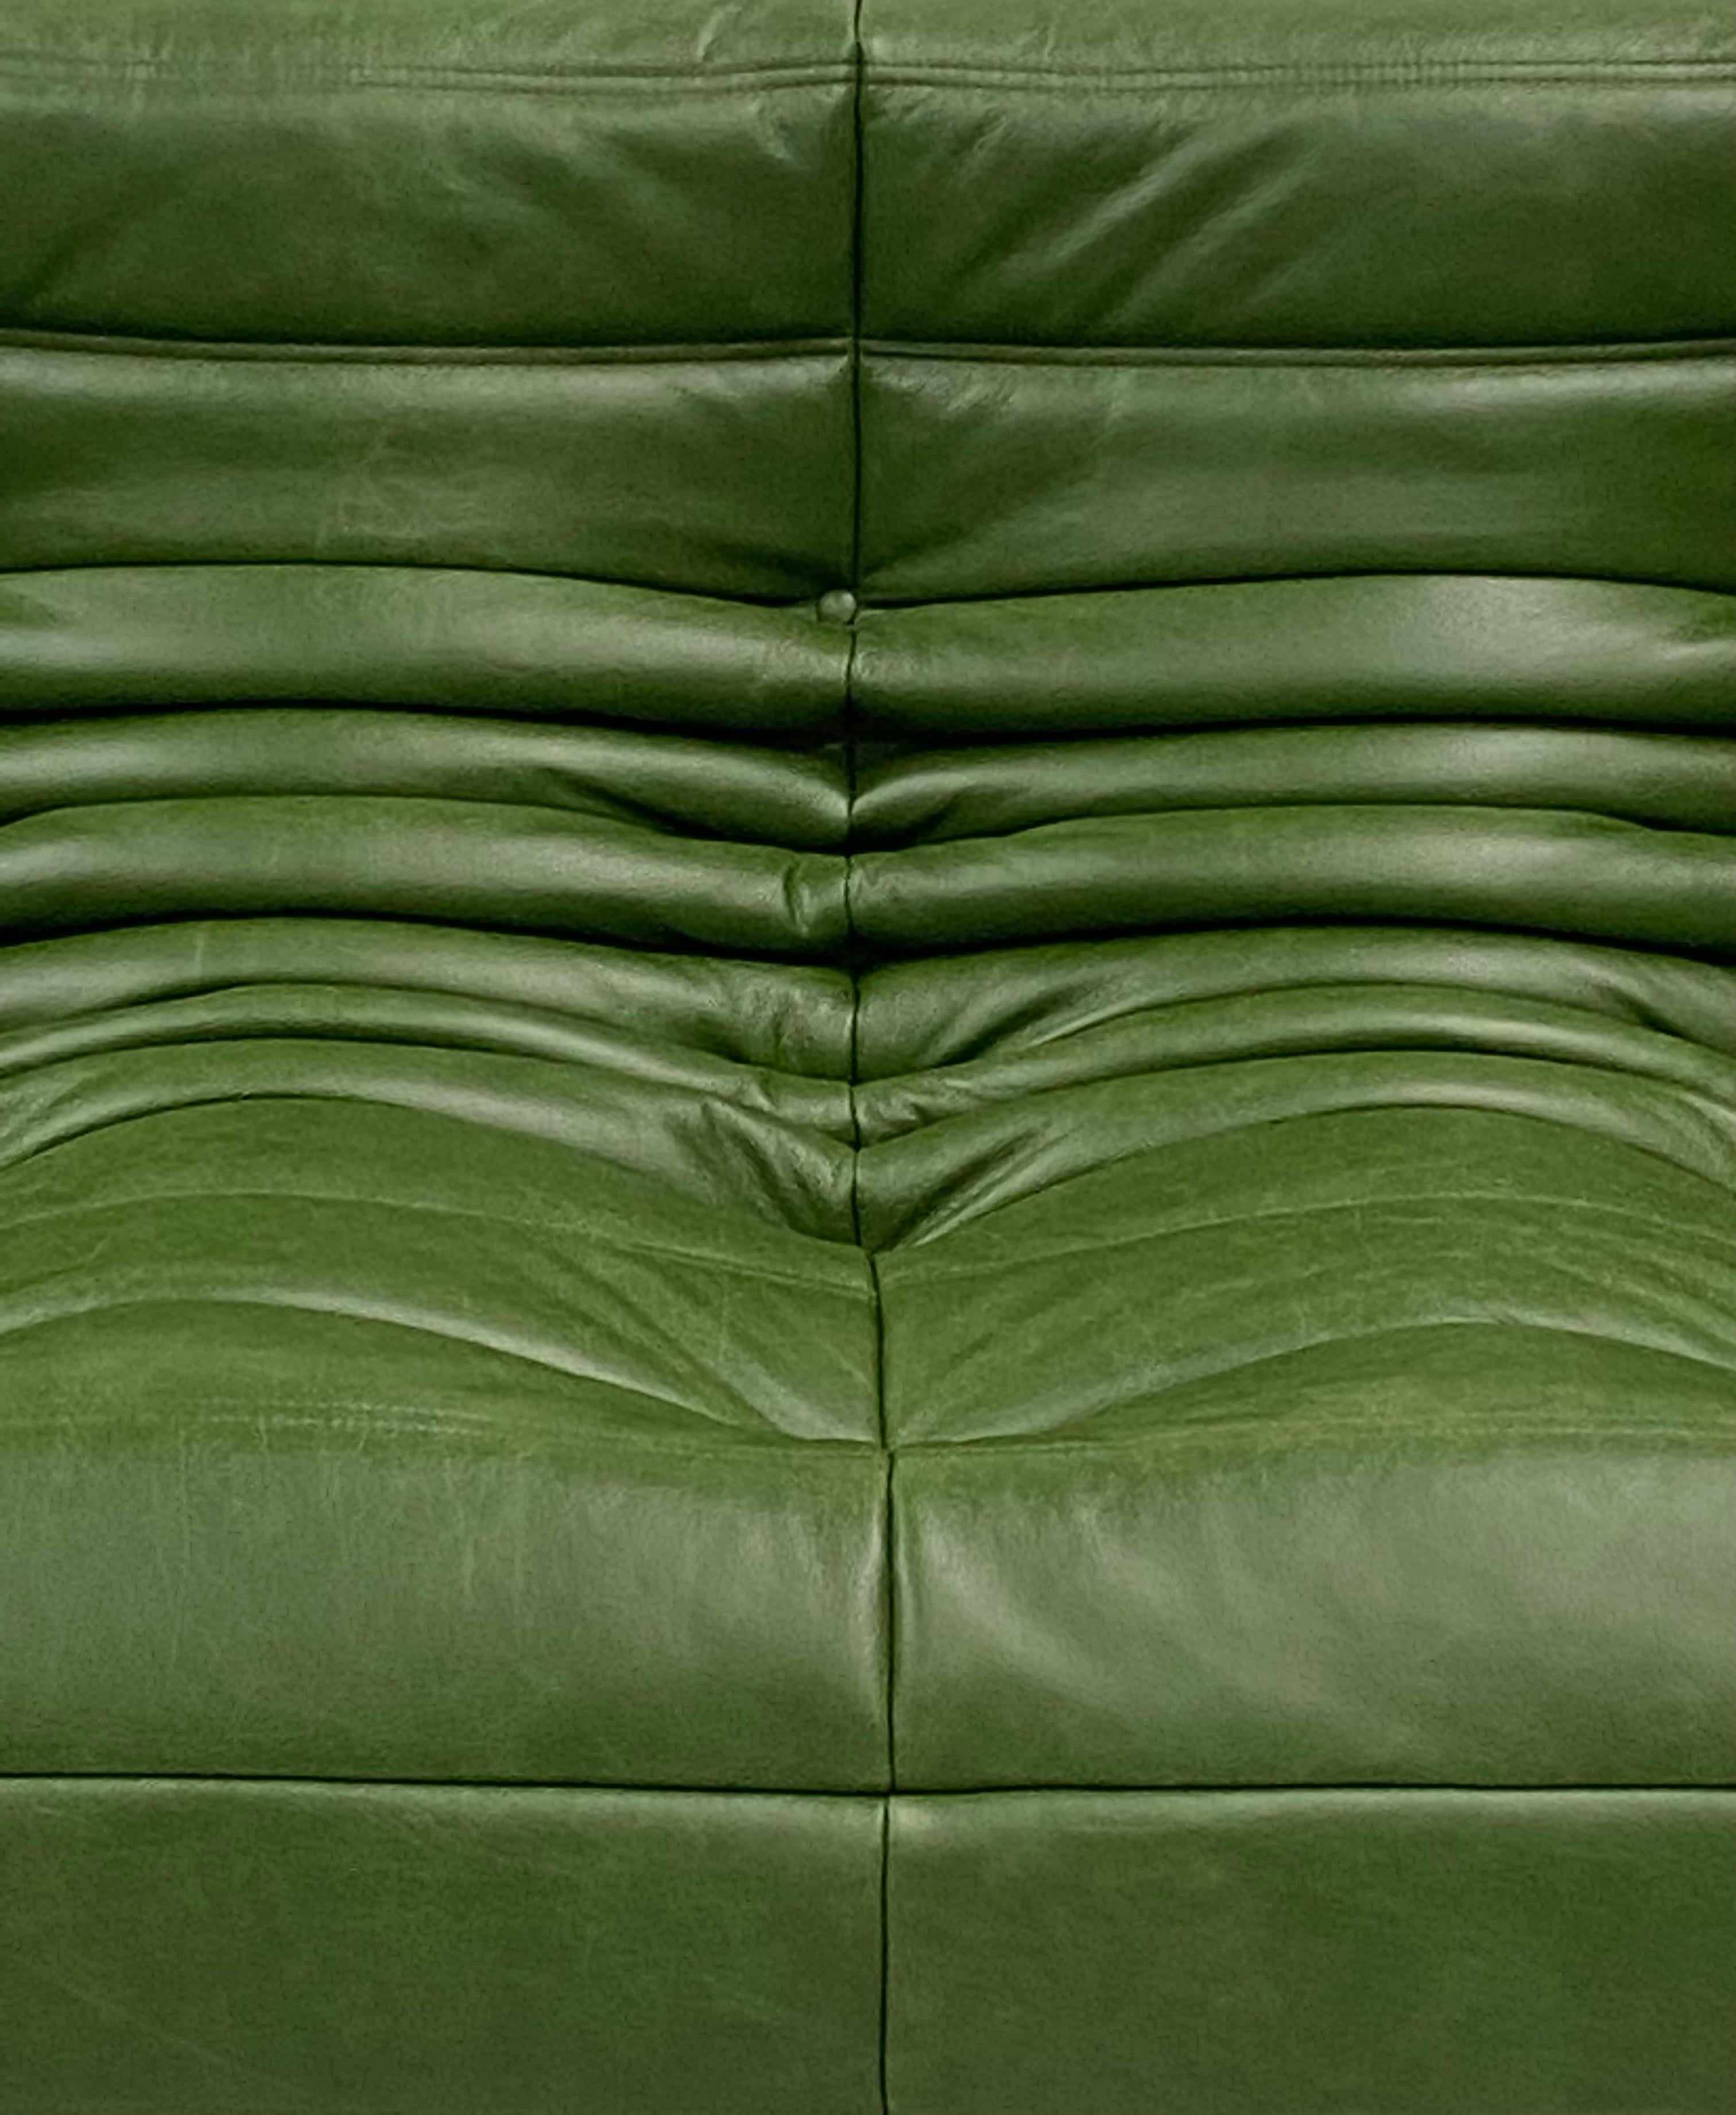 togo sofa green